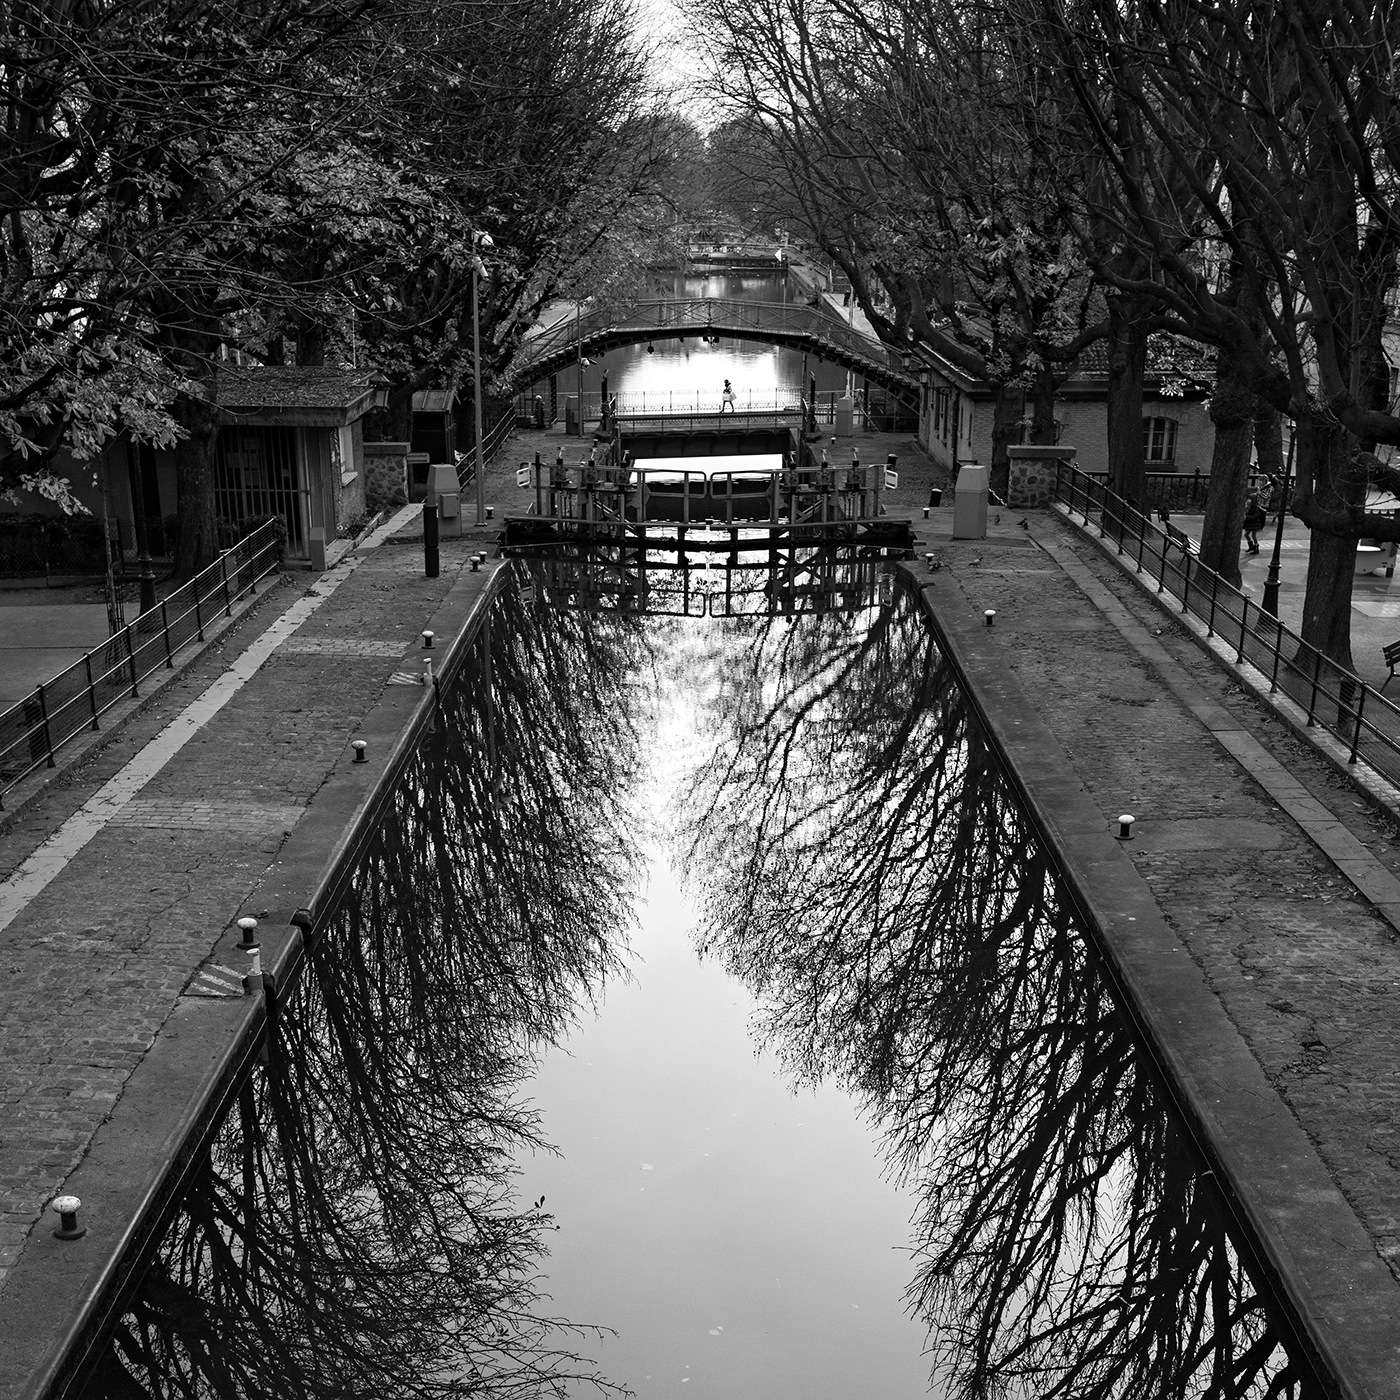 Canal Saint Martin - Paris